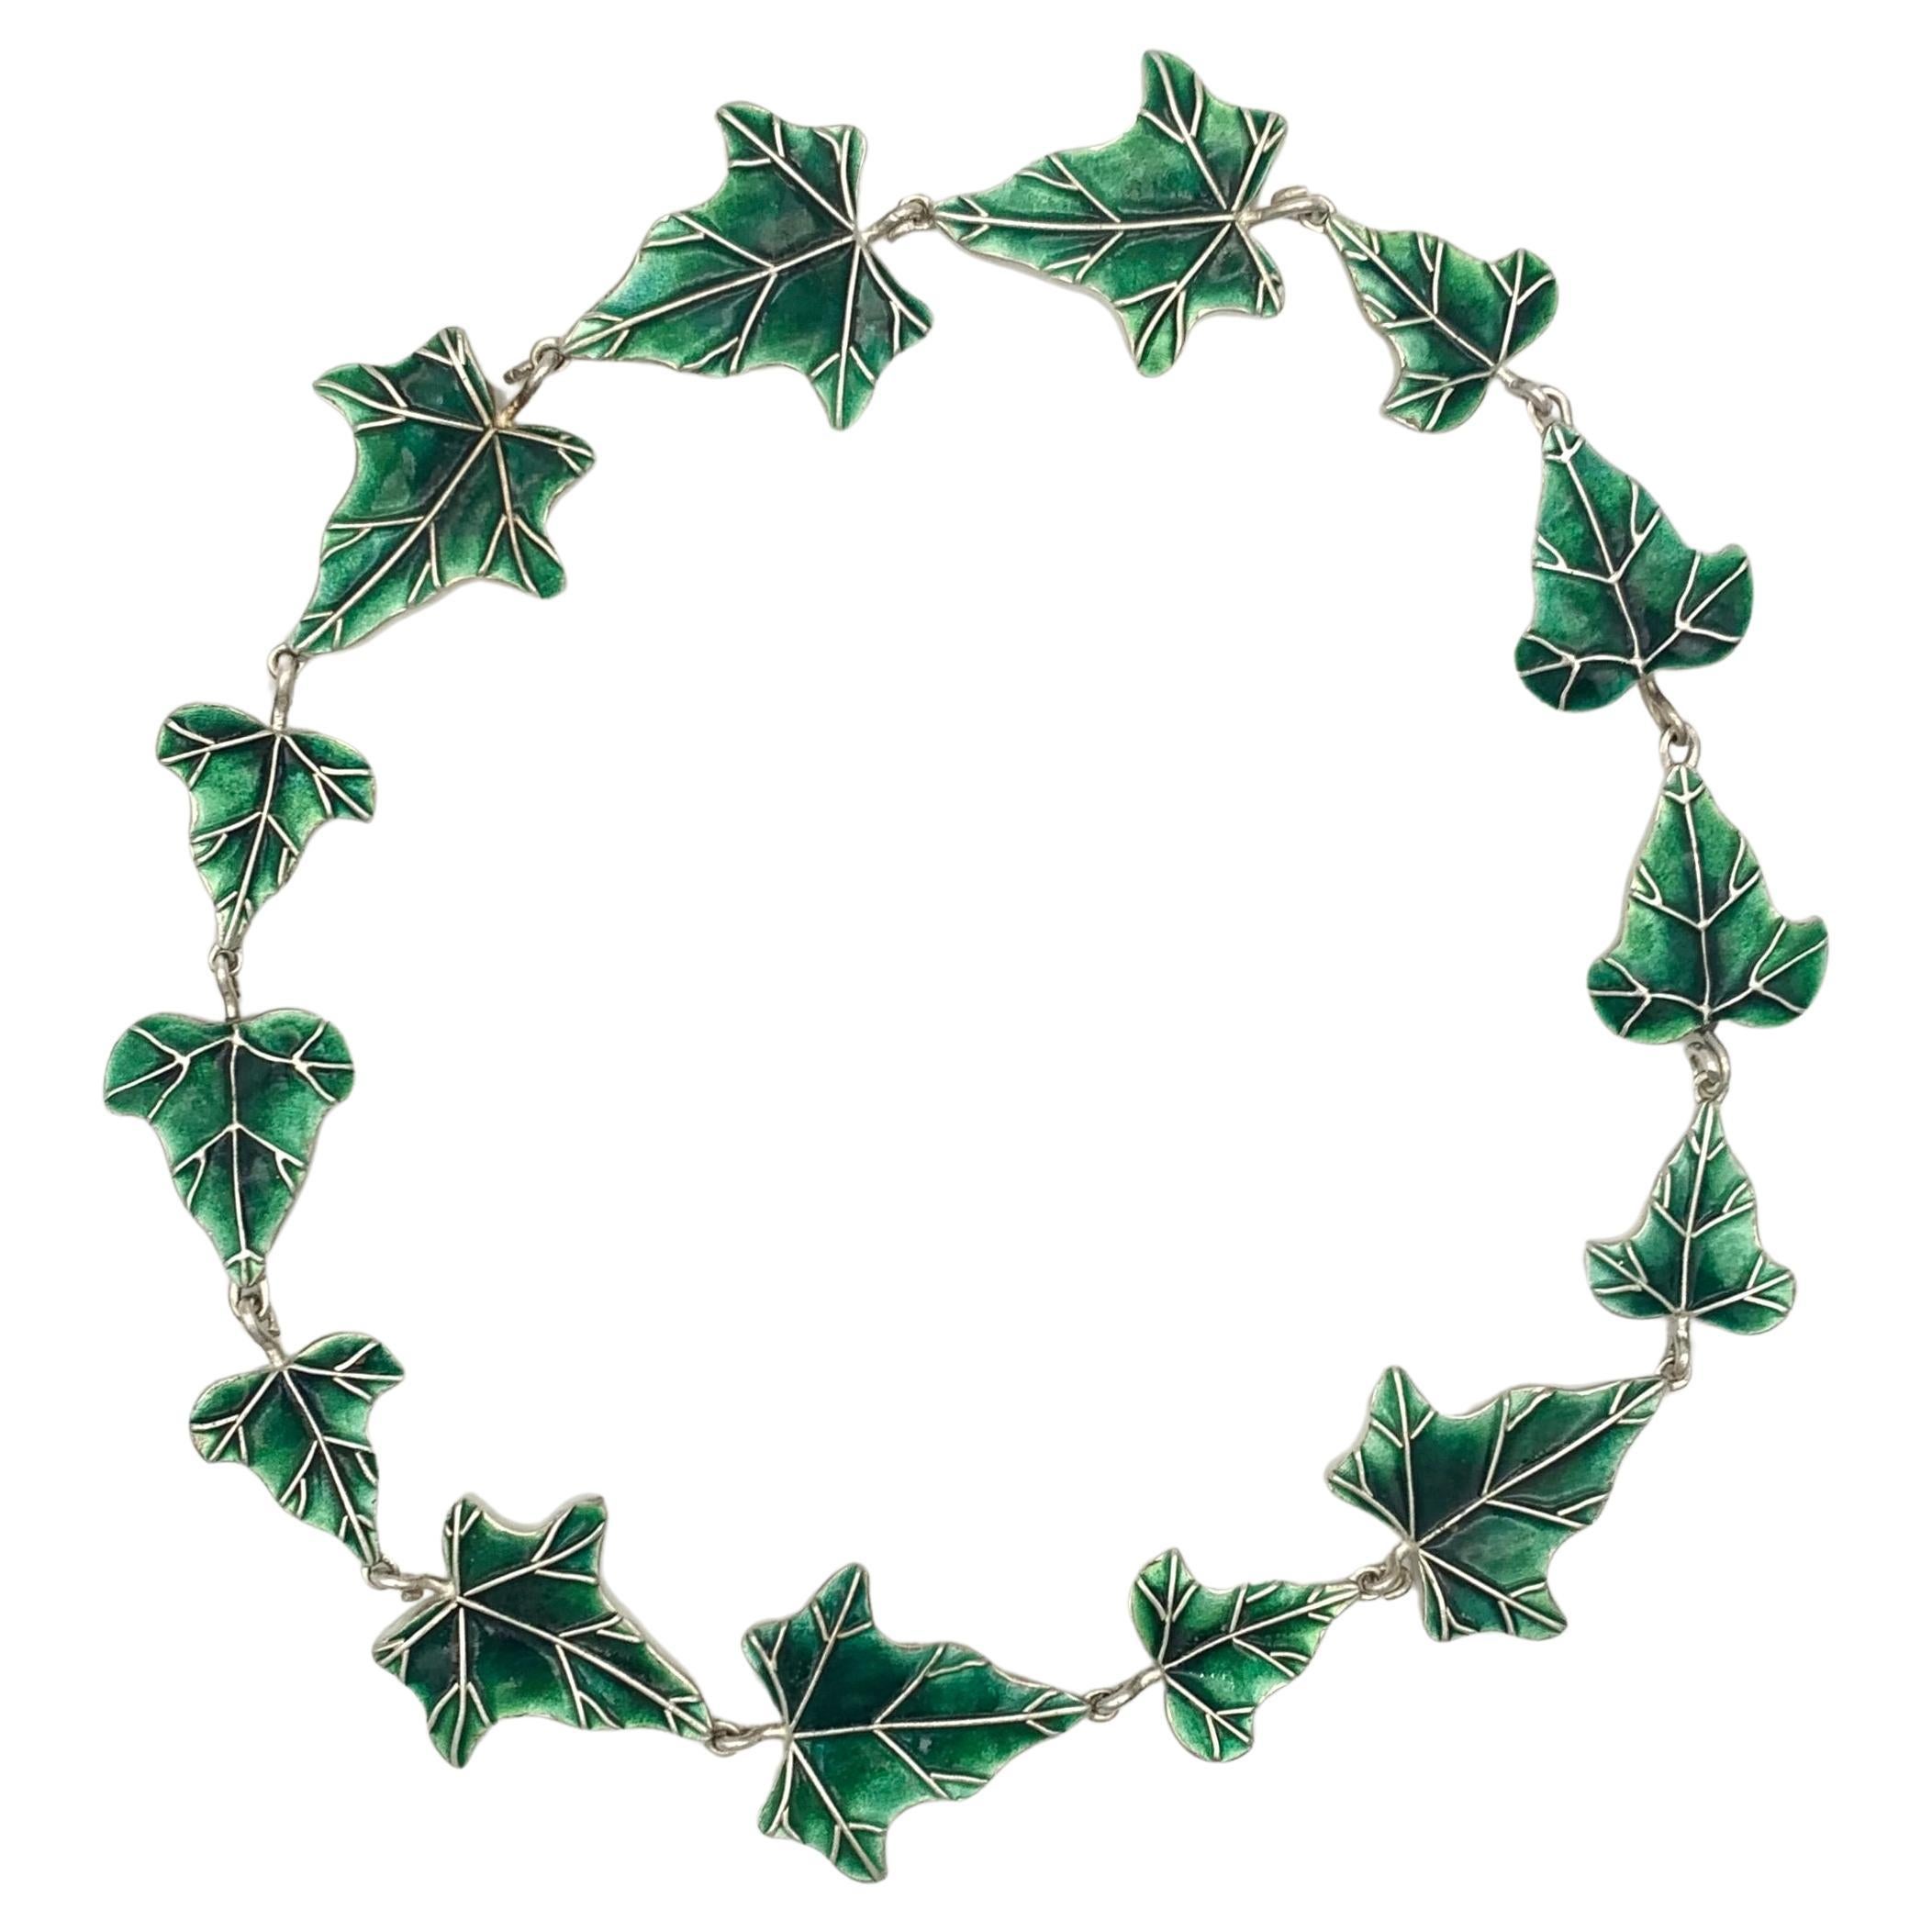 Modernity Handcrafted Ivy Leaves Necklace Sterling Silver (collier de feuilles de lierre)  Émail vert